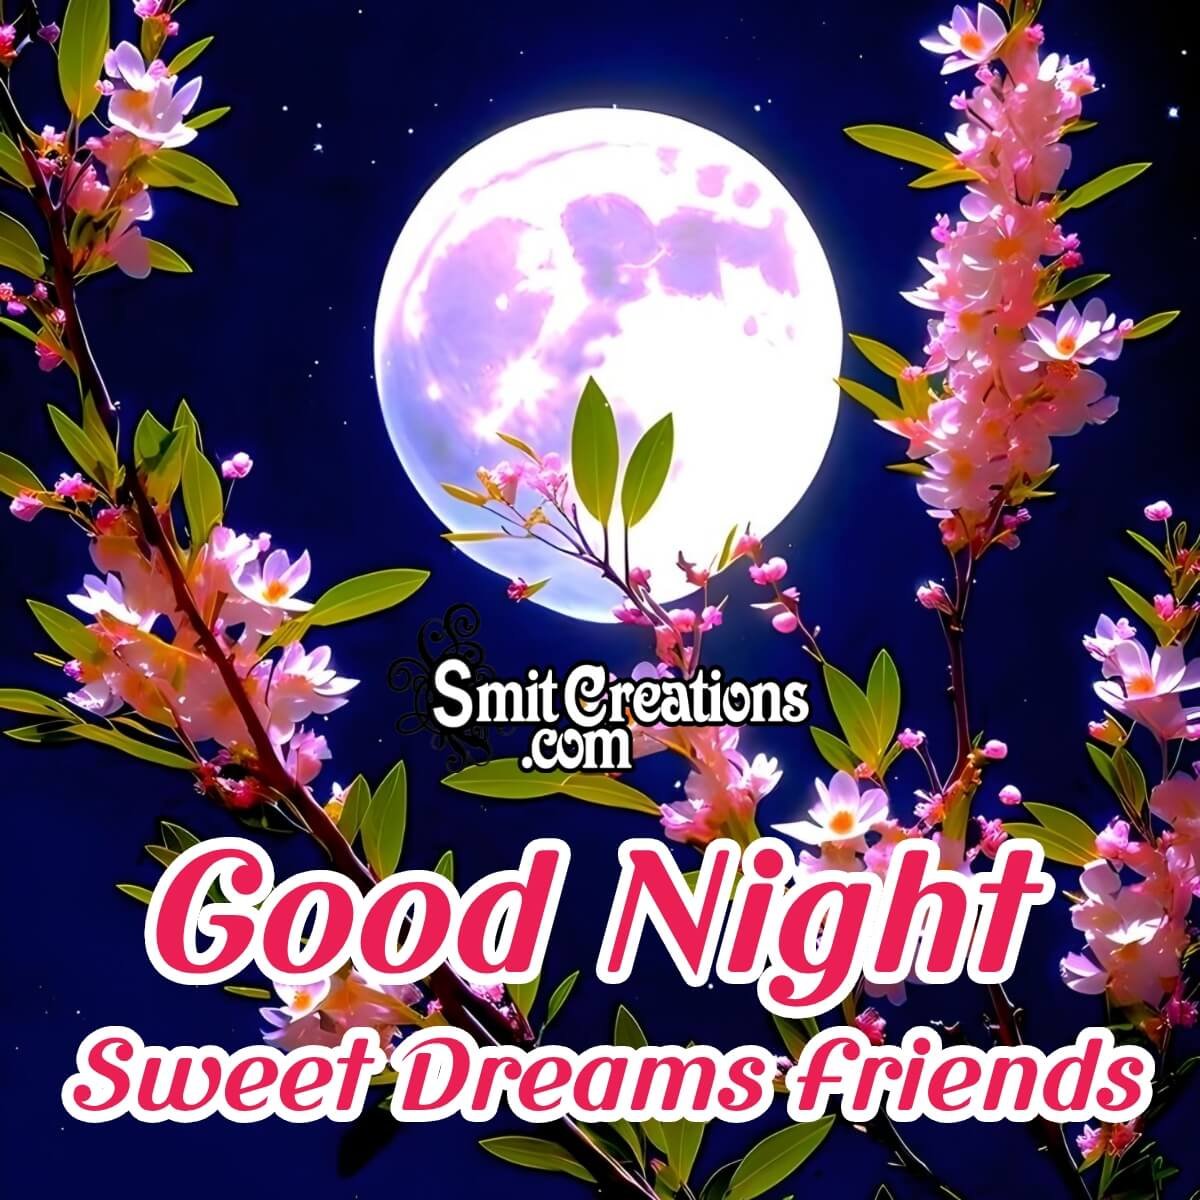 Good Night Sweet Dreams Friends